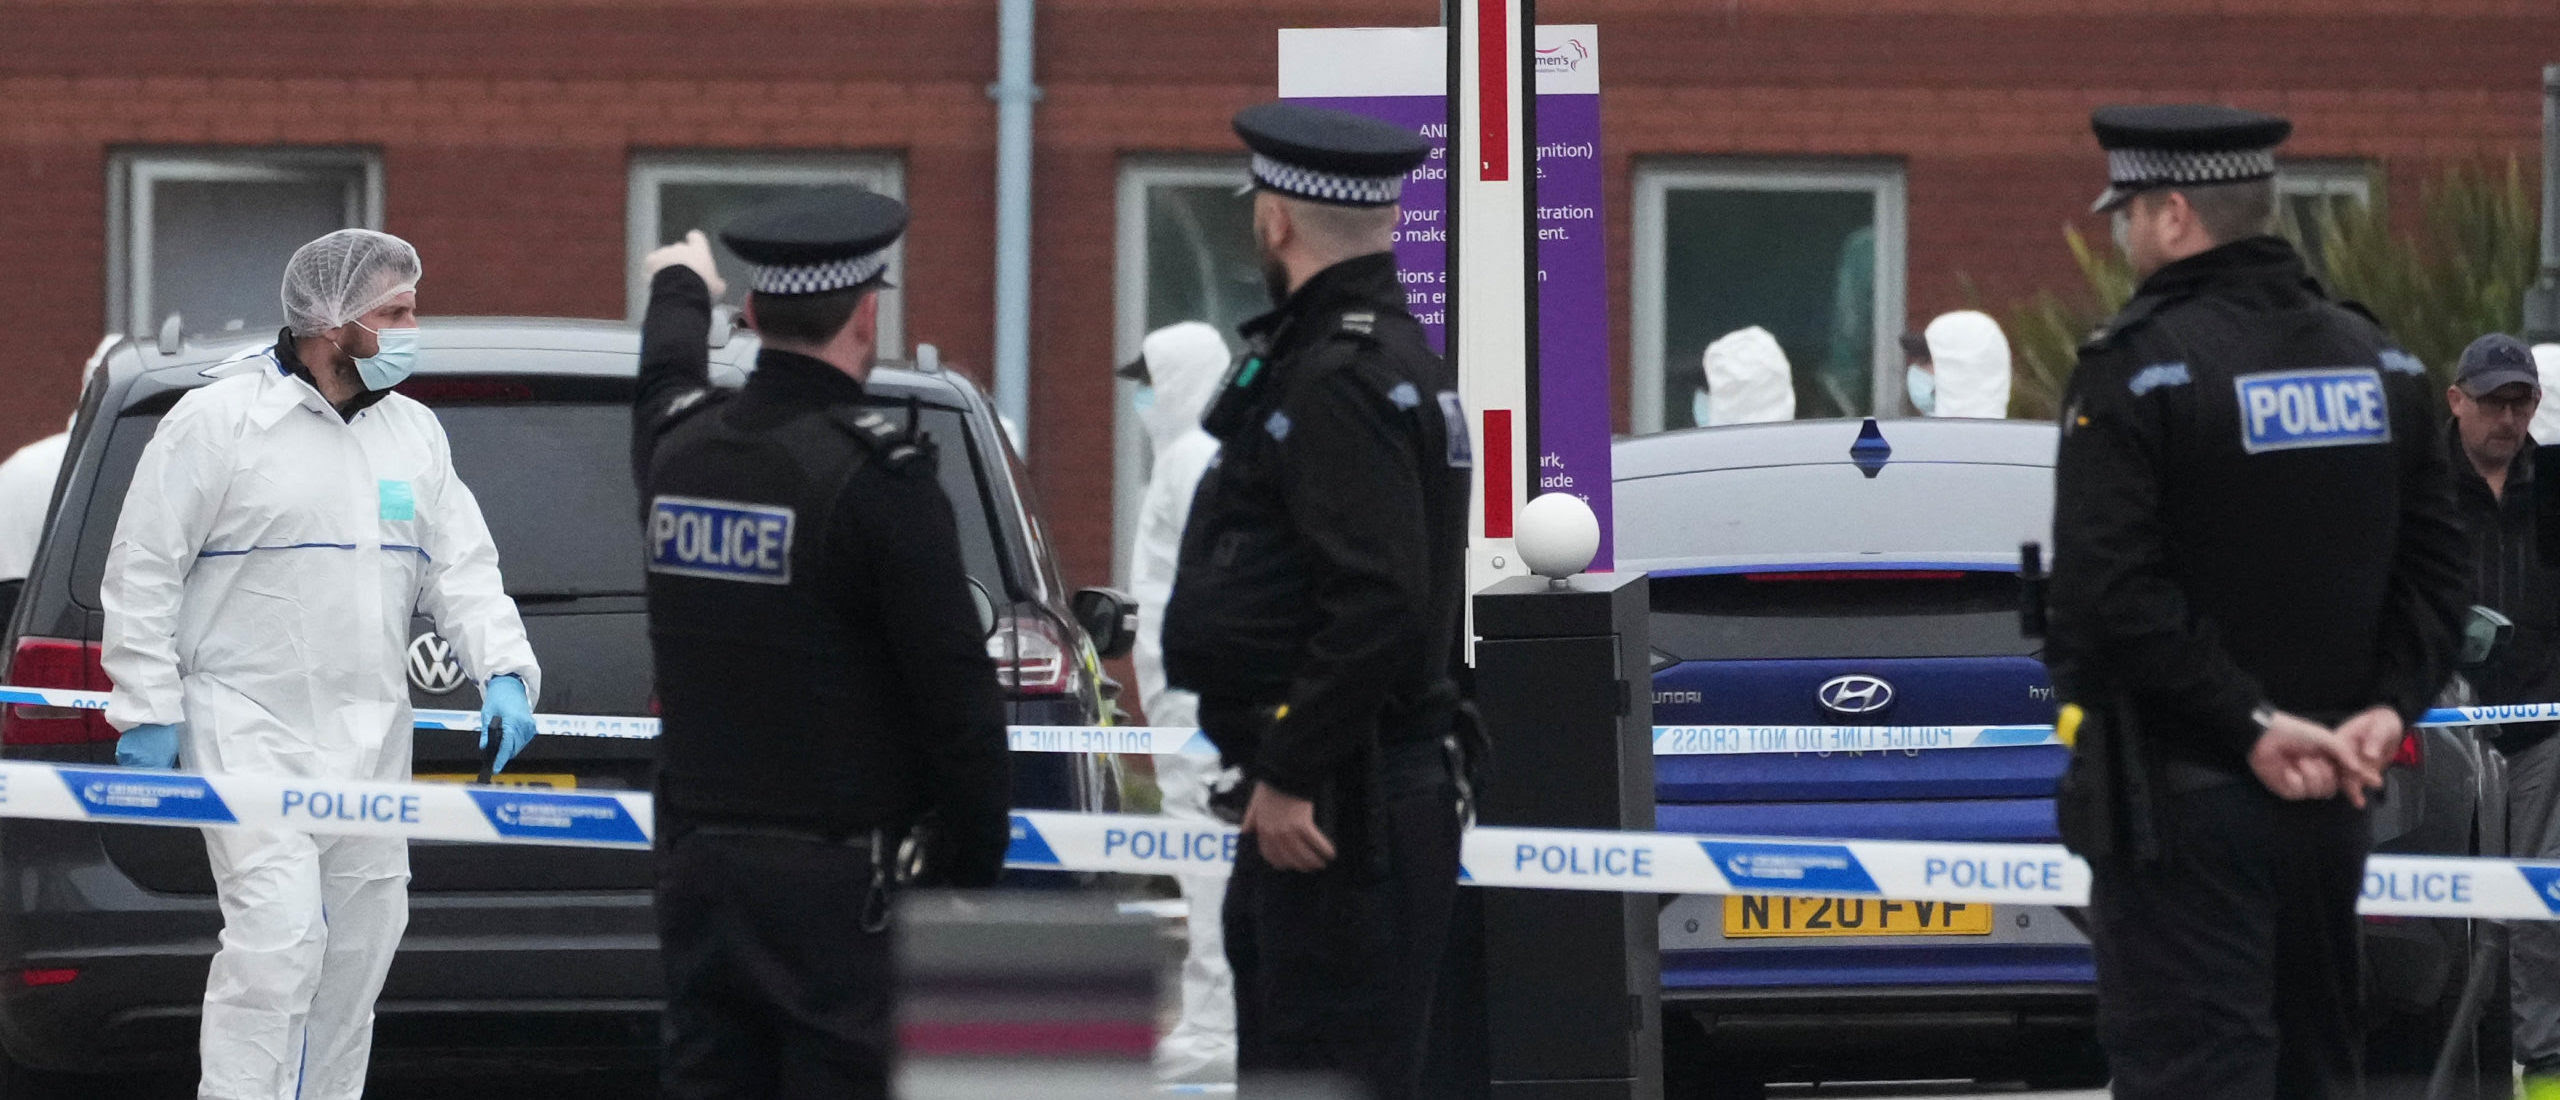 Taxi Explosion Near UK Hospital Investigated As Terrorist Attack